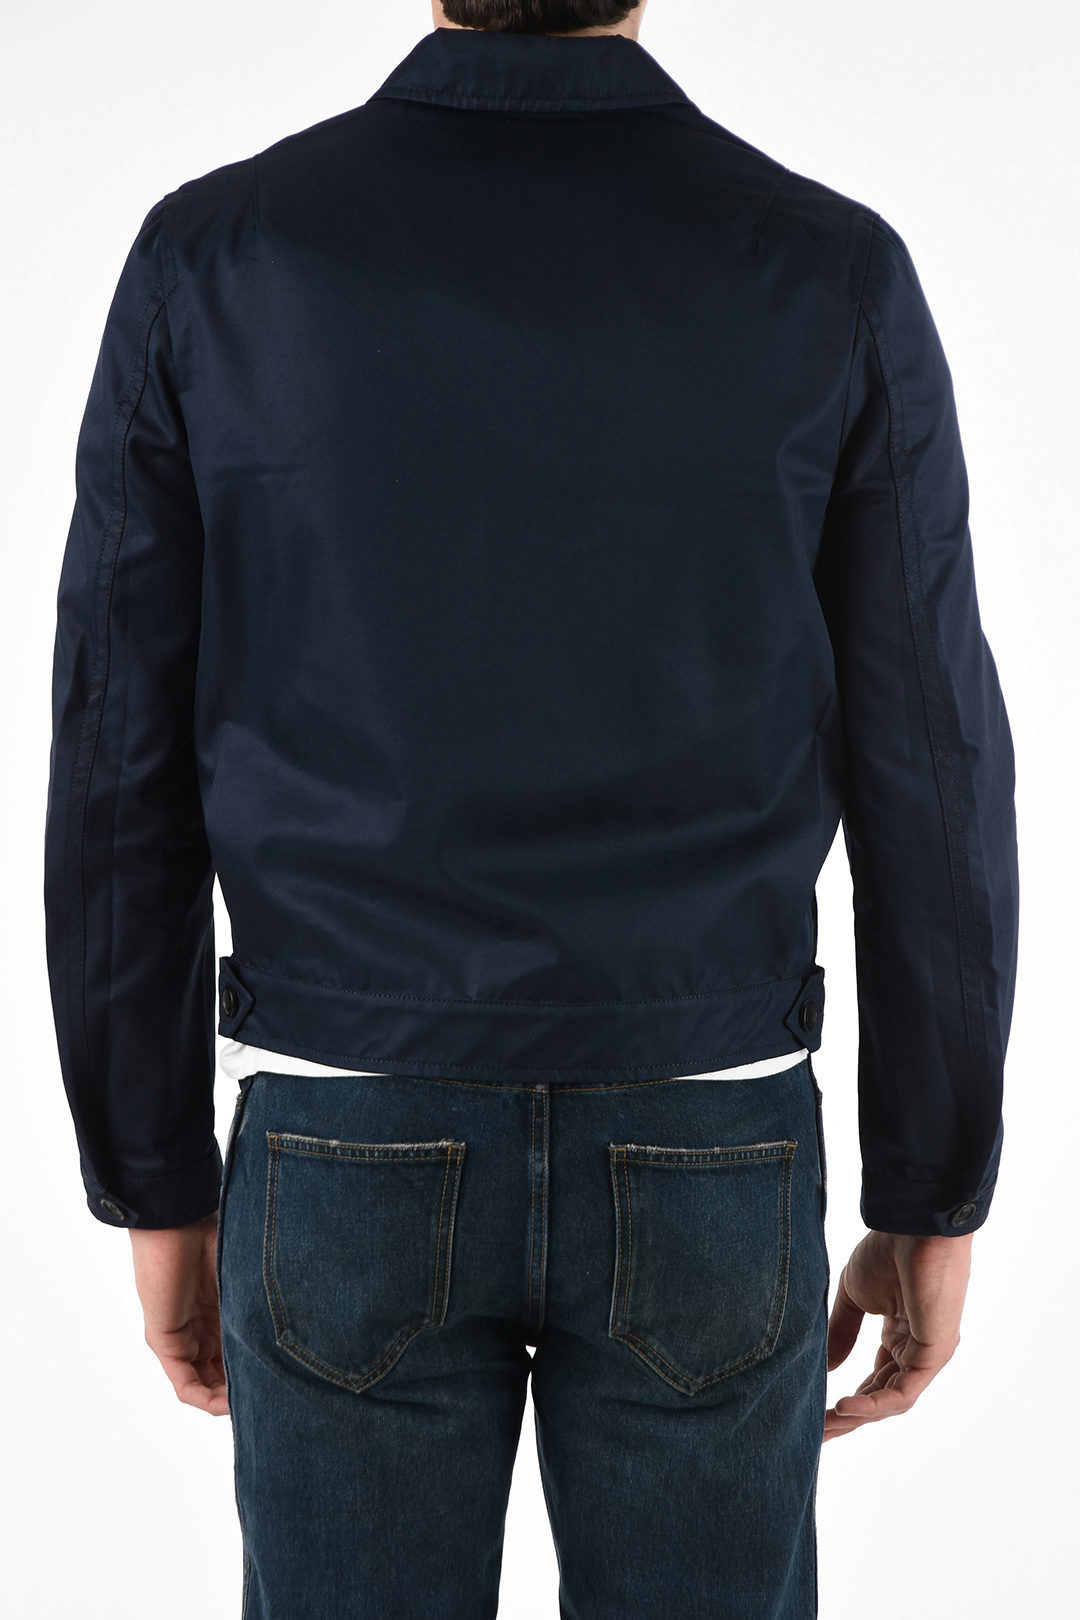 Prada Utility Jacket with Button Closure men - Glamood Outlet